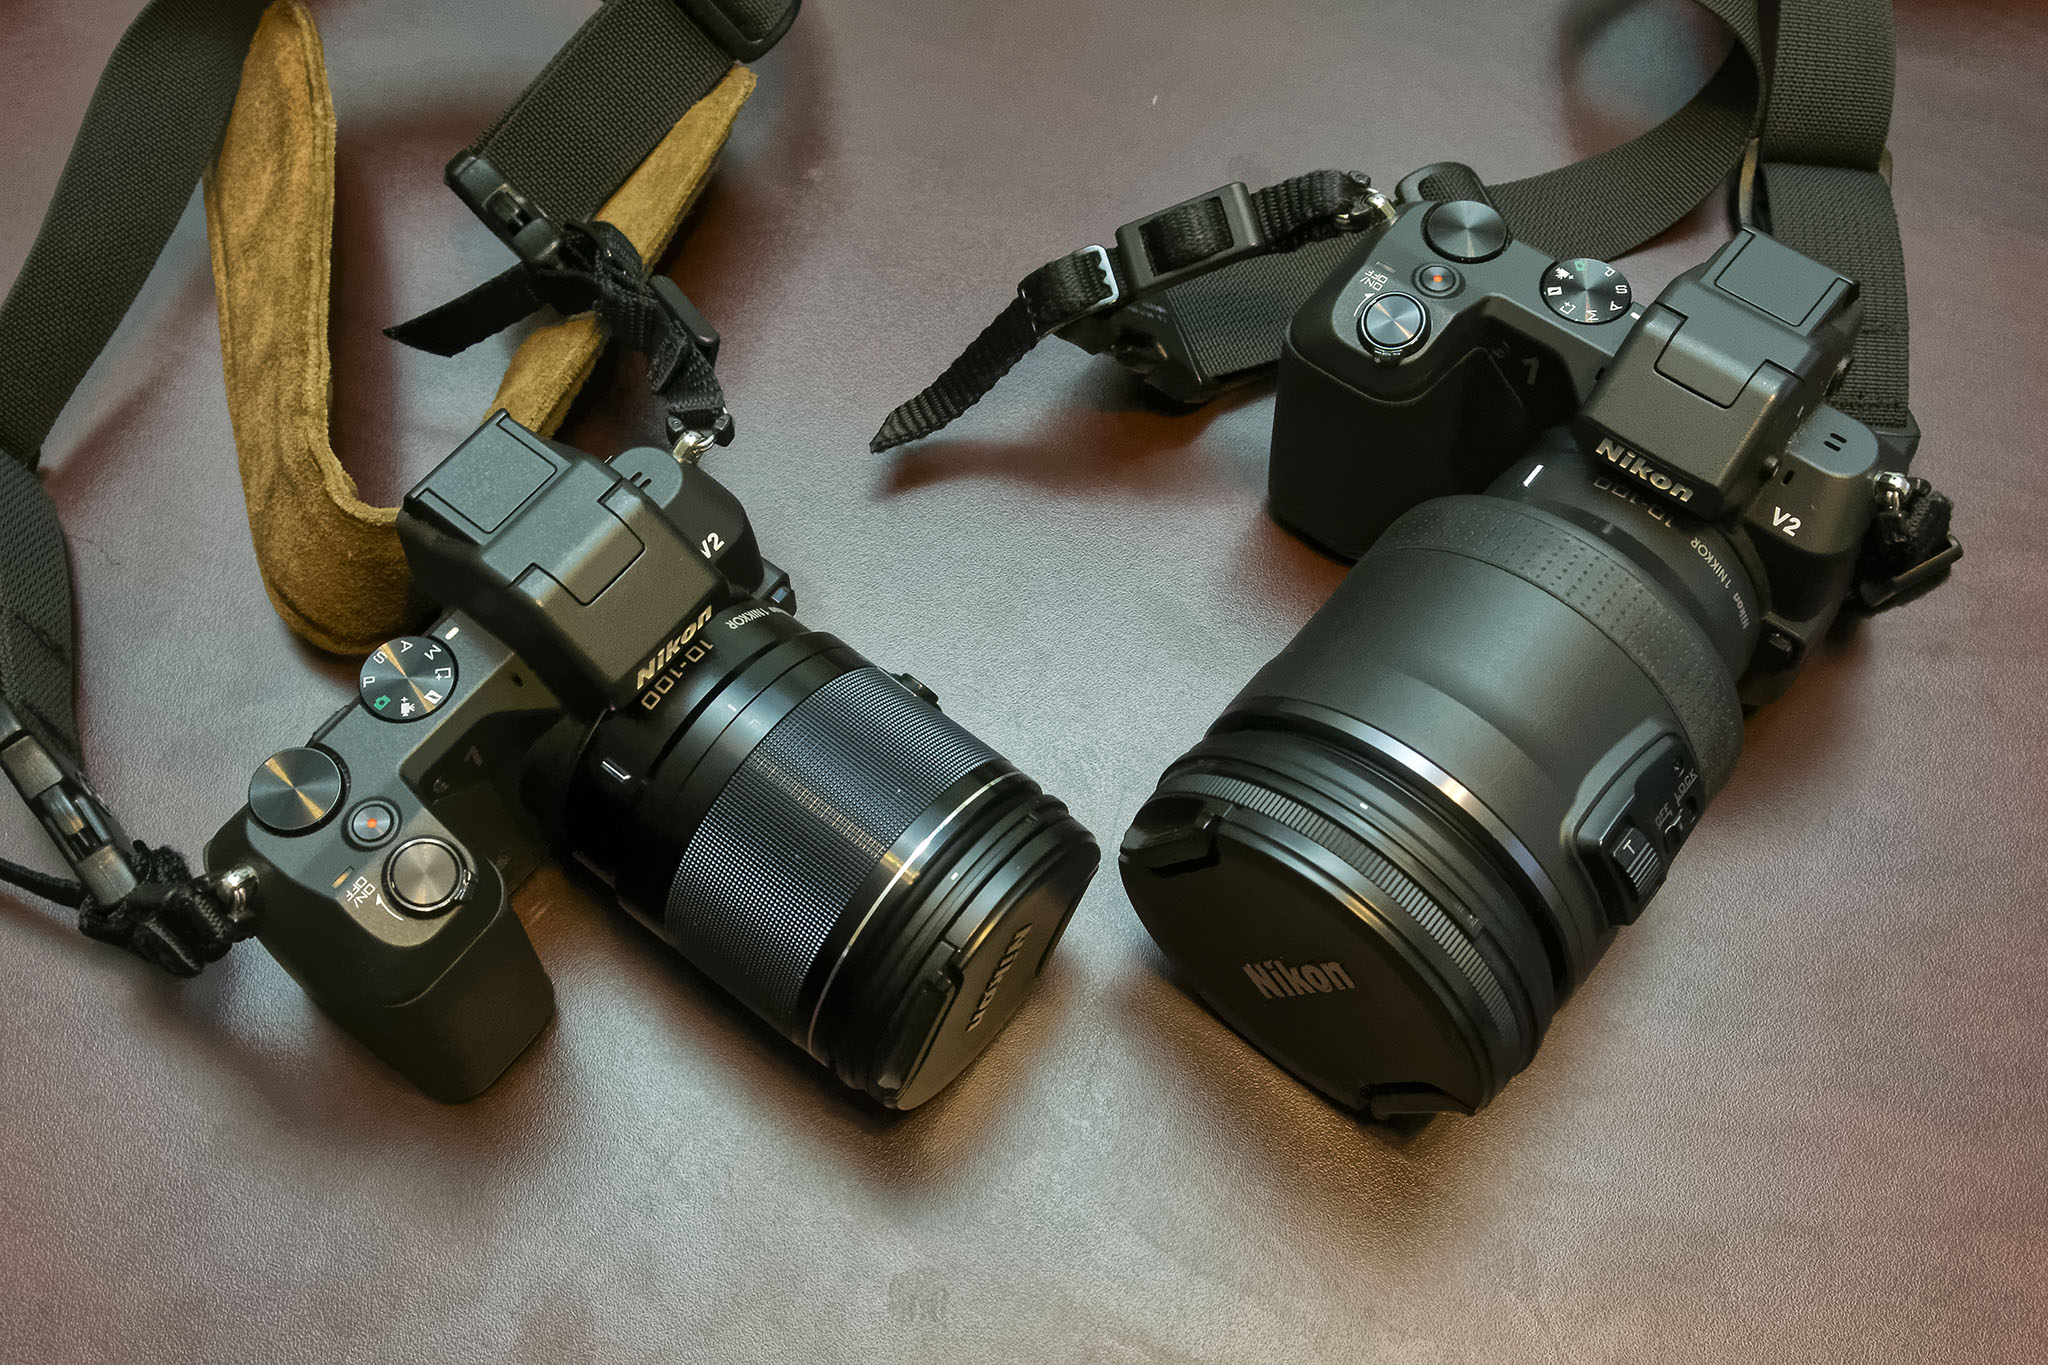 1 Nikon 10-100mm f/4-5.6 Hands-on Review - Small Sensor 